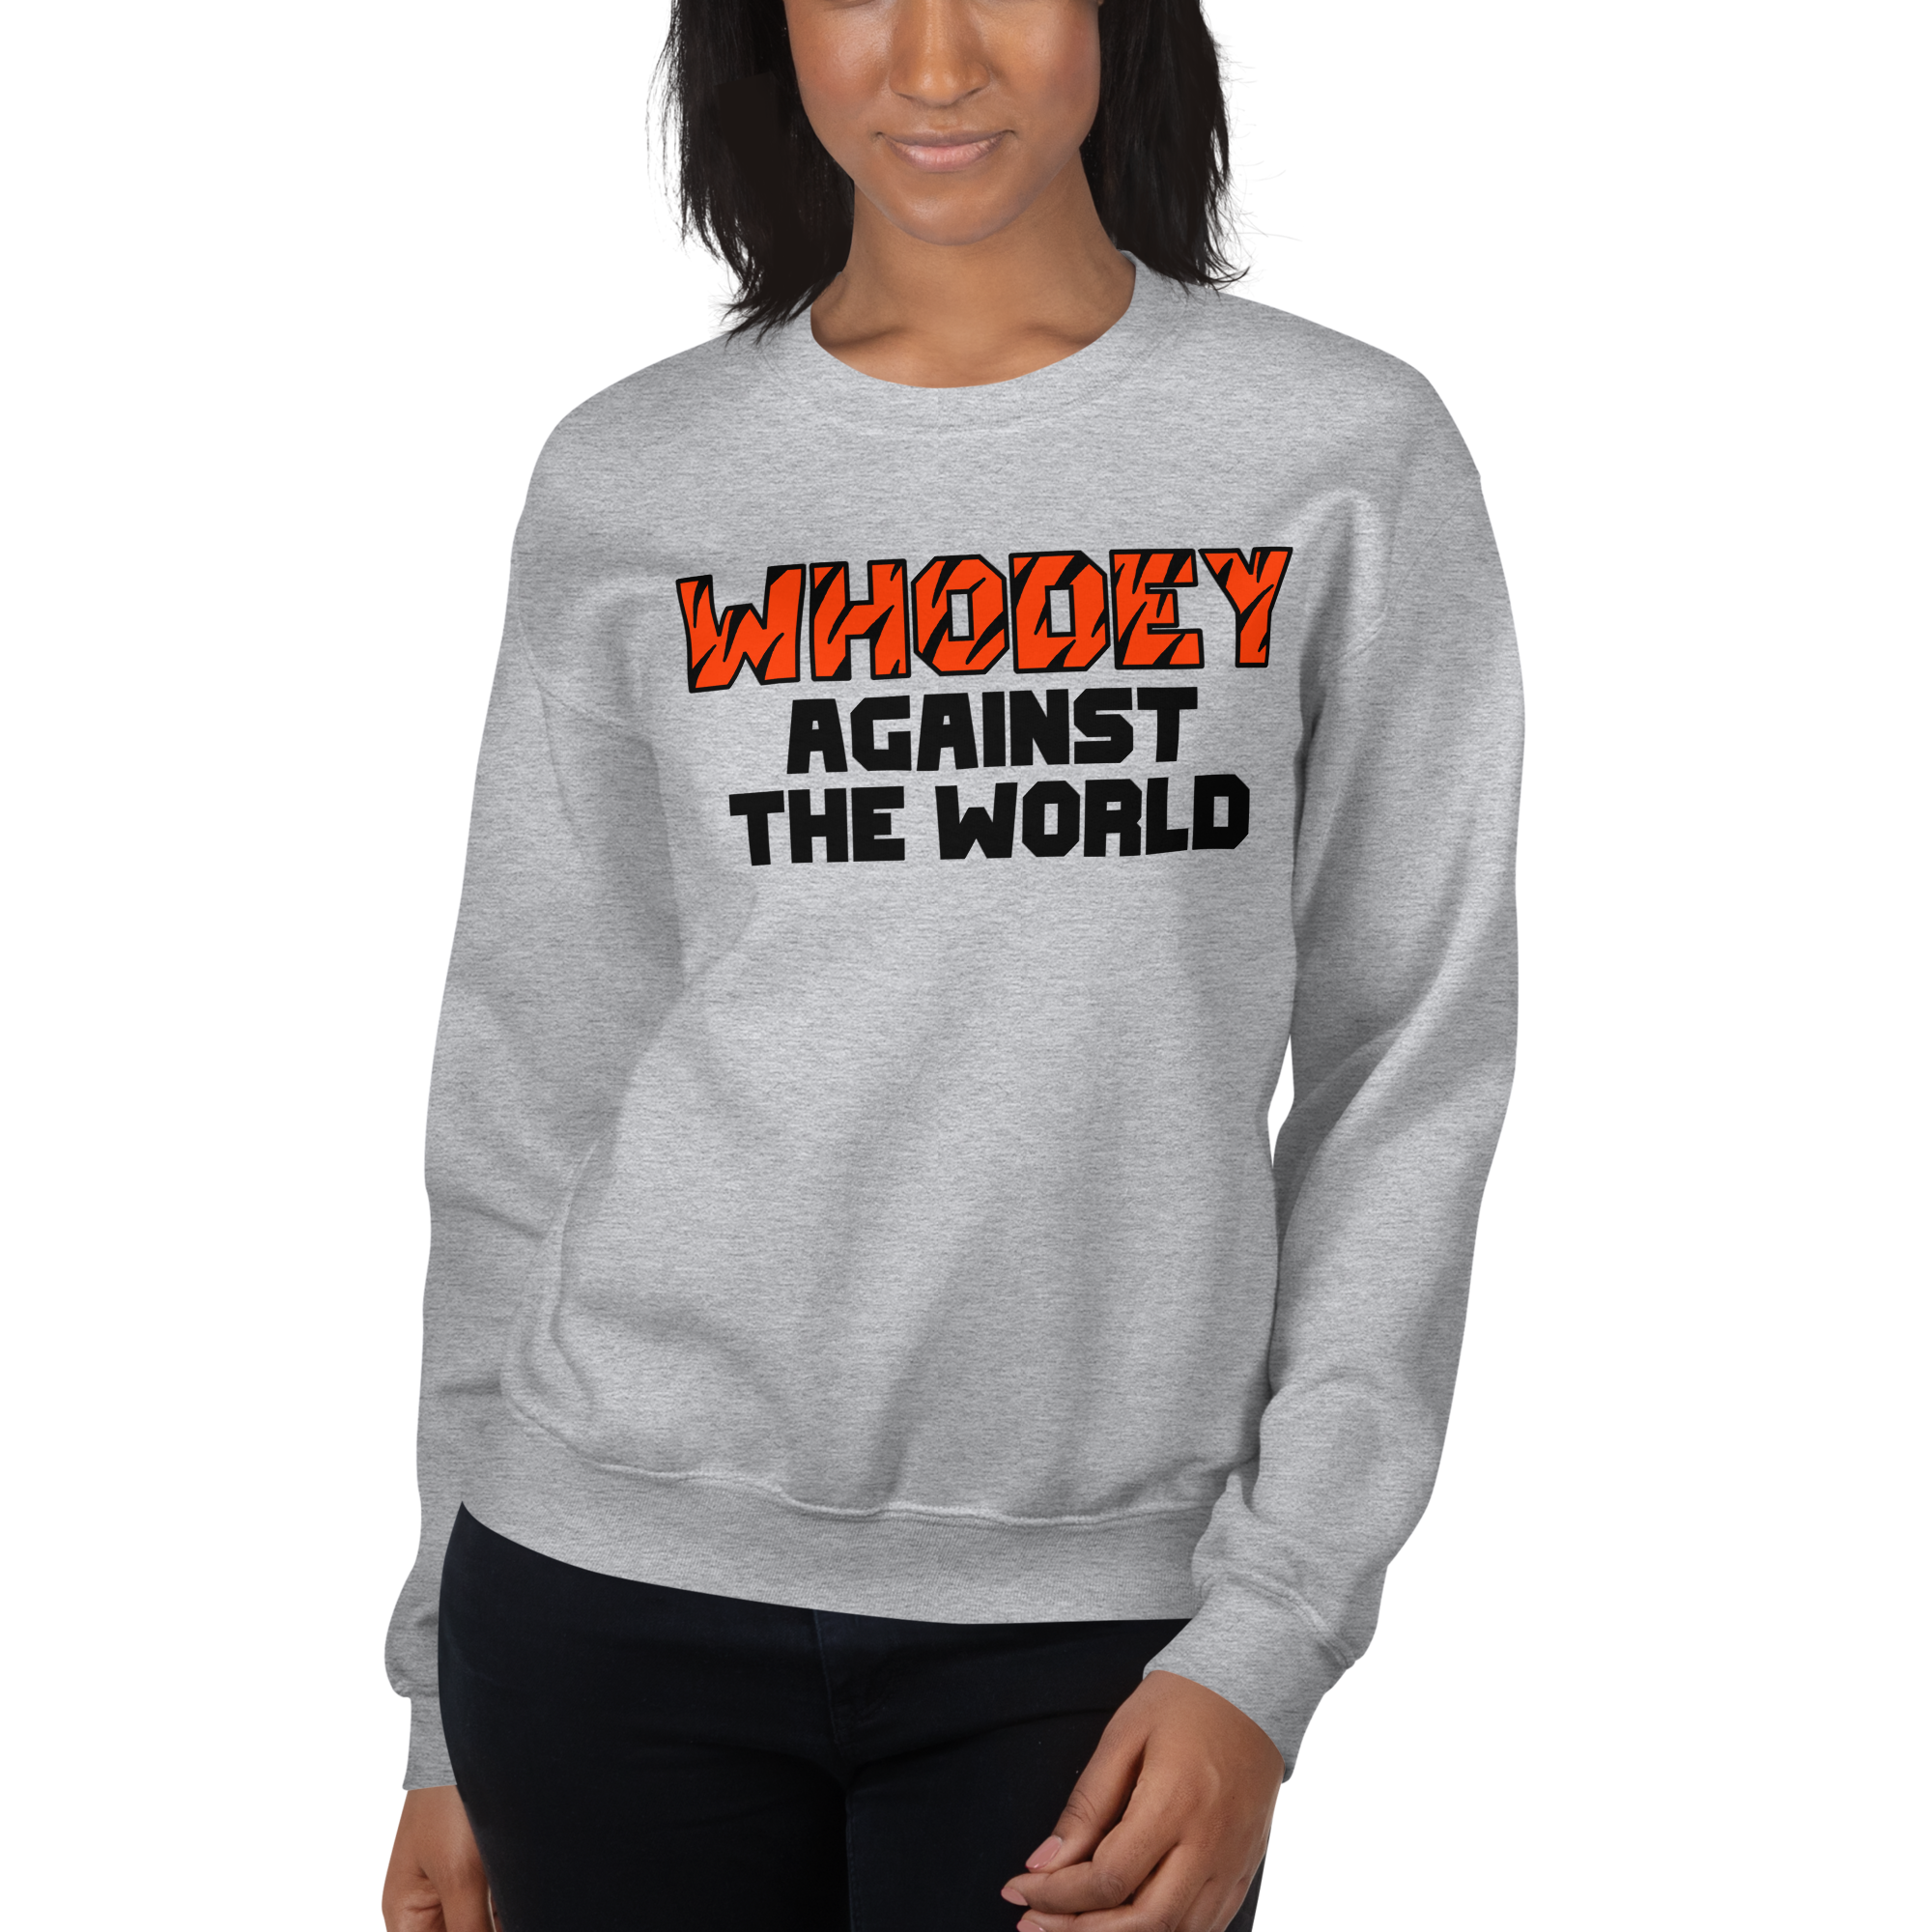 WHODEY Against The World - Sweatshirt